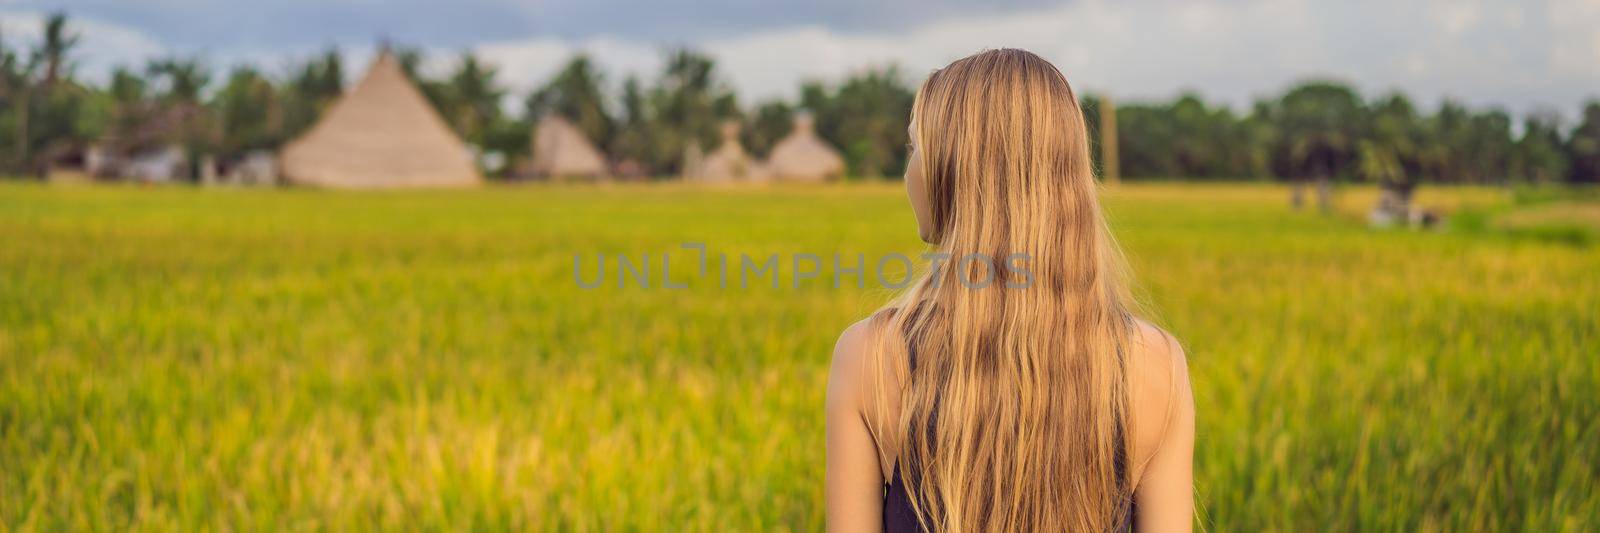 Women tourists enjoy the panoramic view of the beautiful Asian scenery of rice fields BANNER, LONG FORMAT by galitskaya